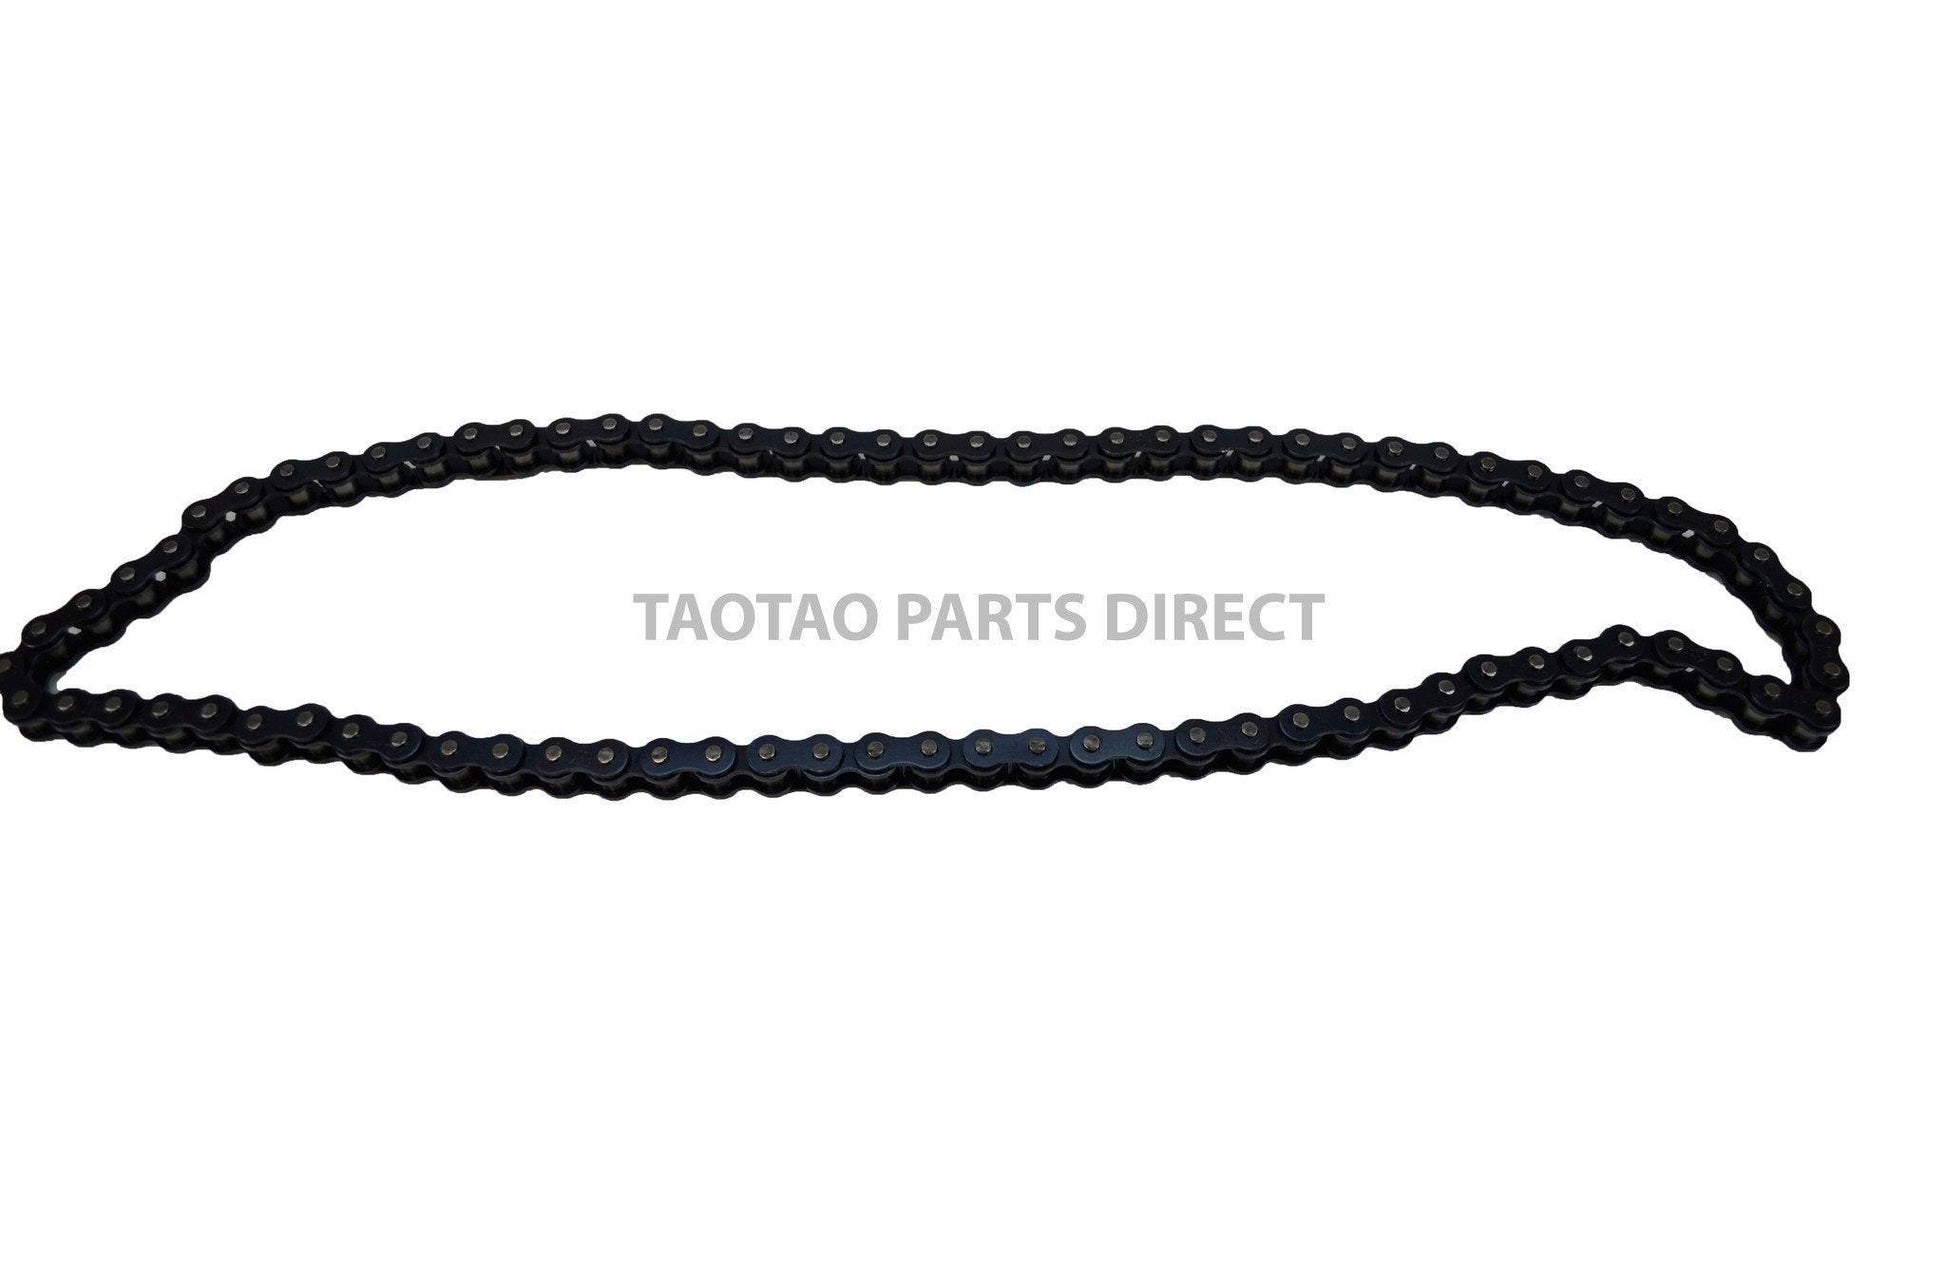 ATA135D Chain - TaoTao Parts Direct